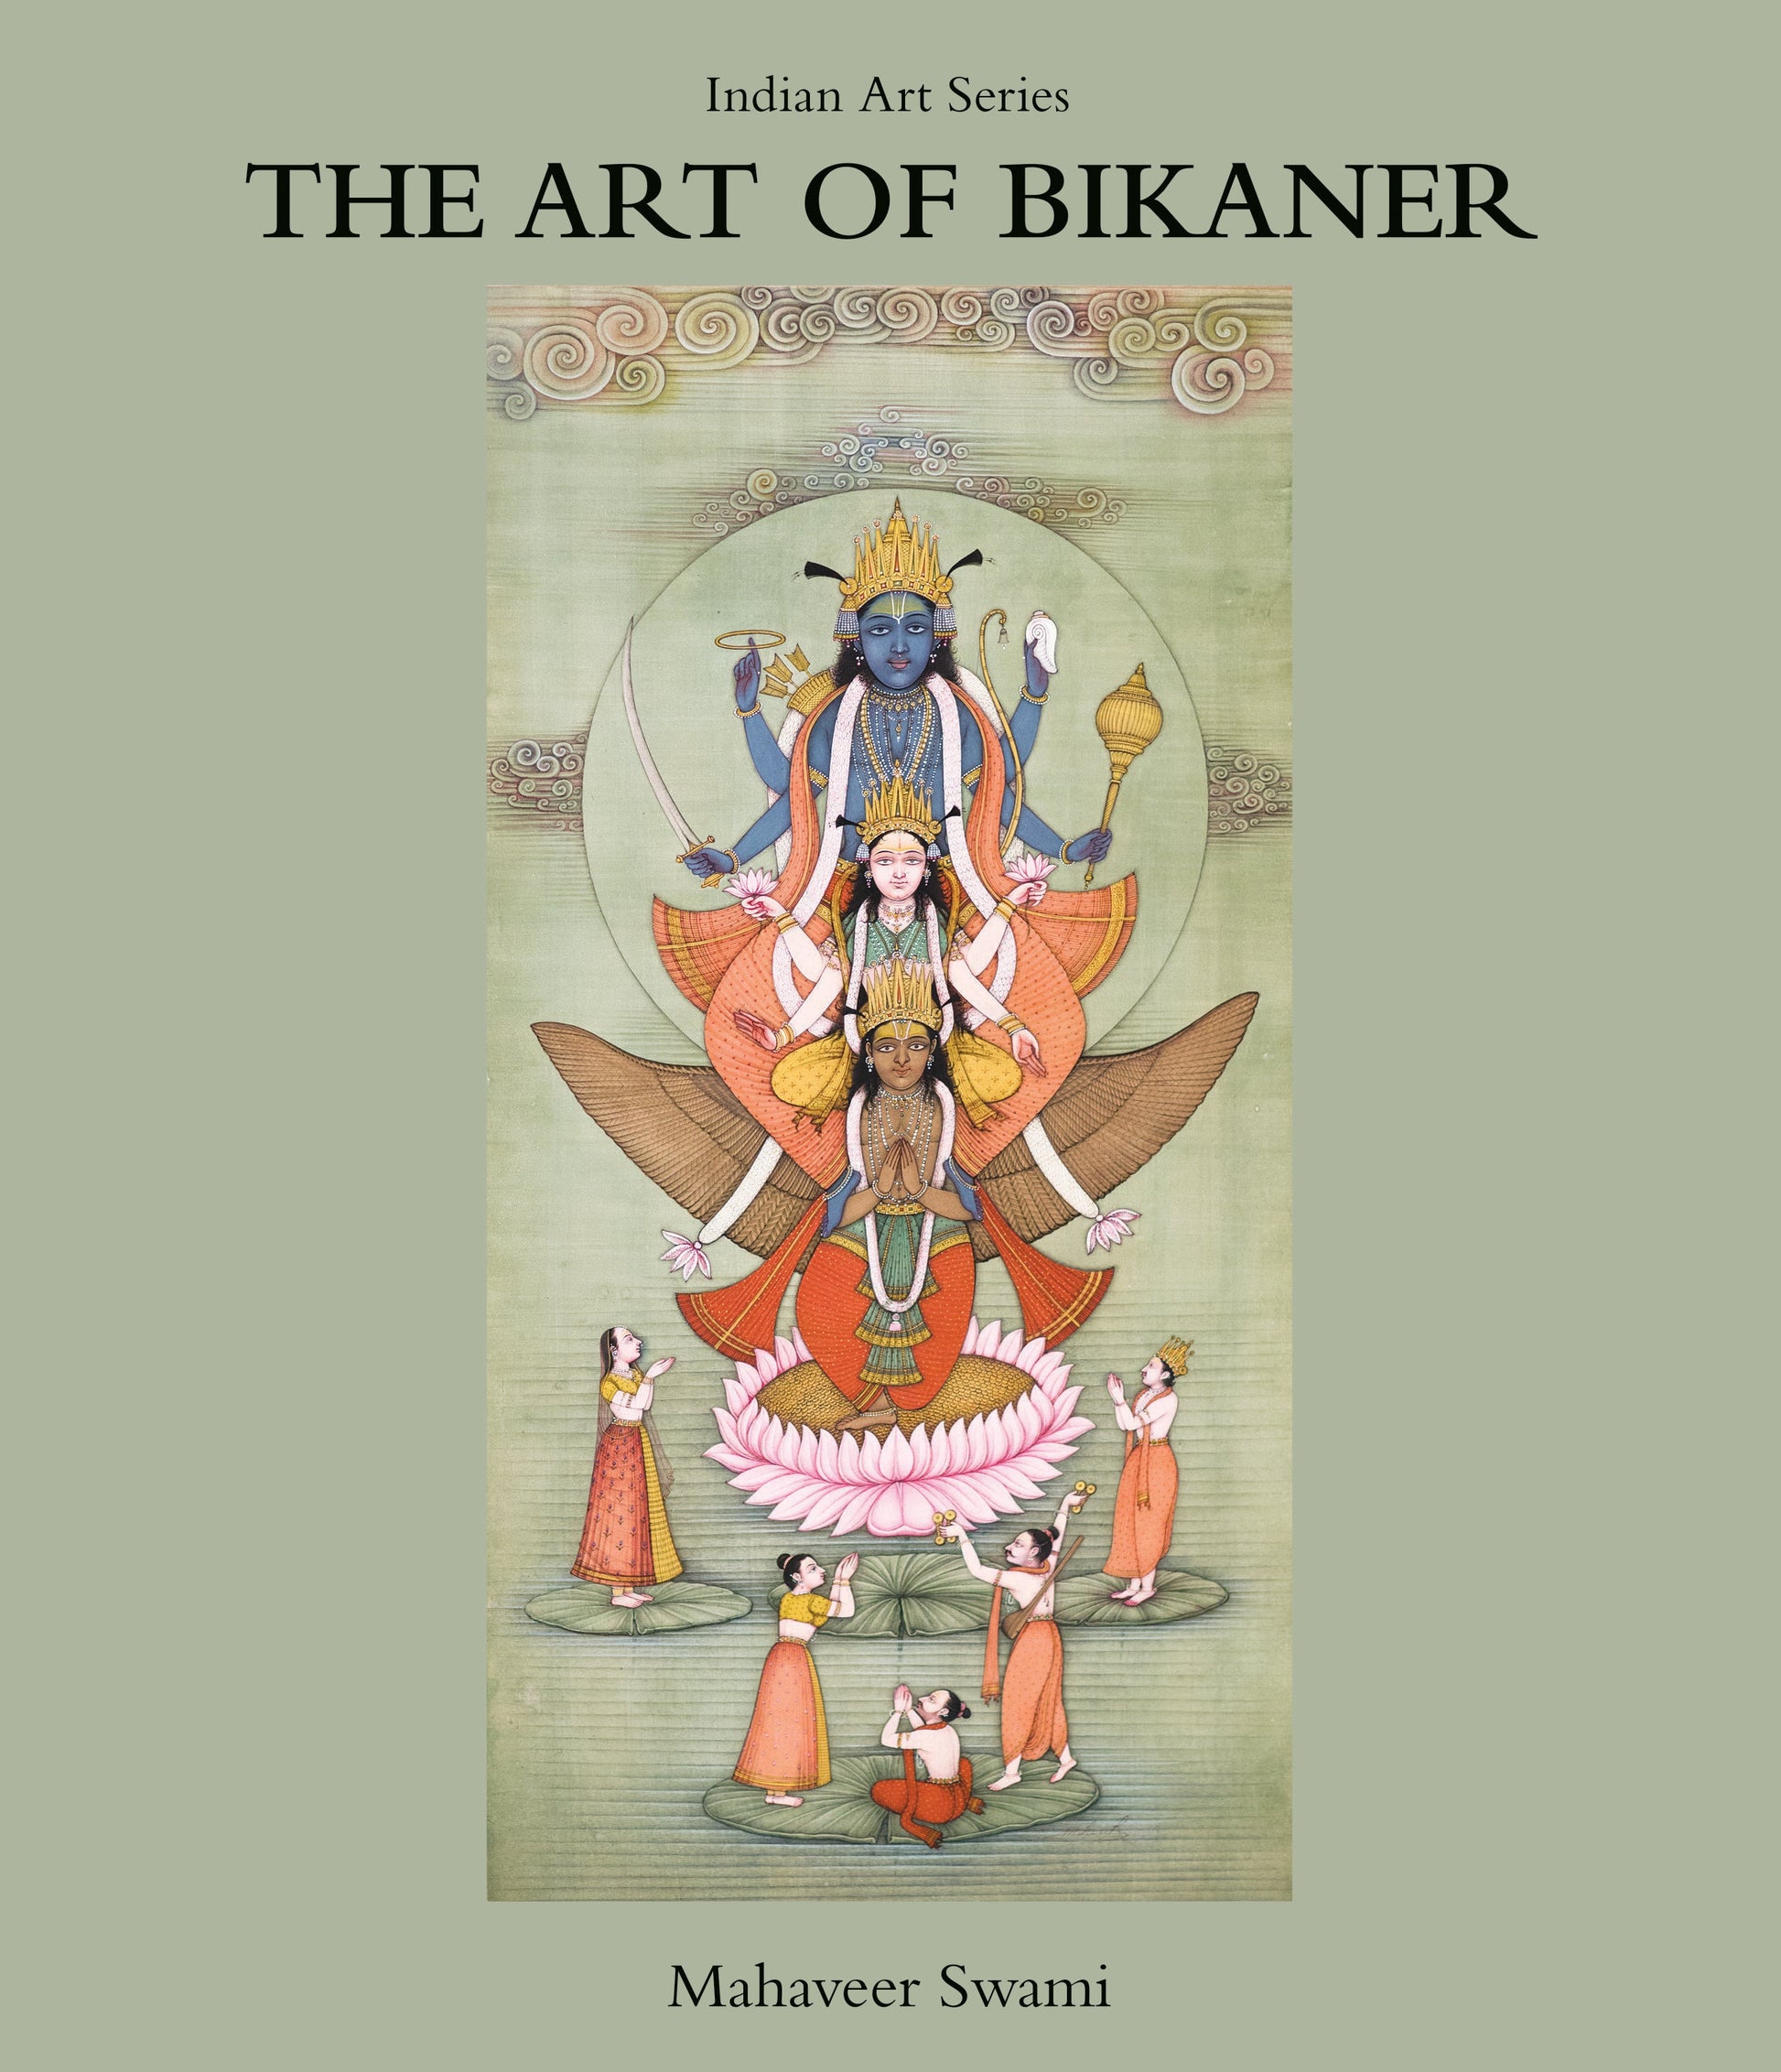 The Art of Bikaner